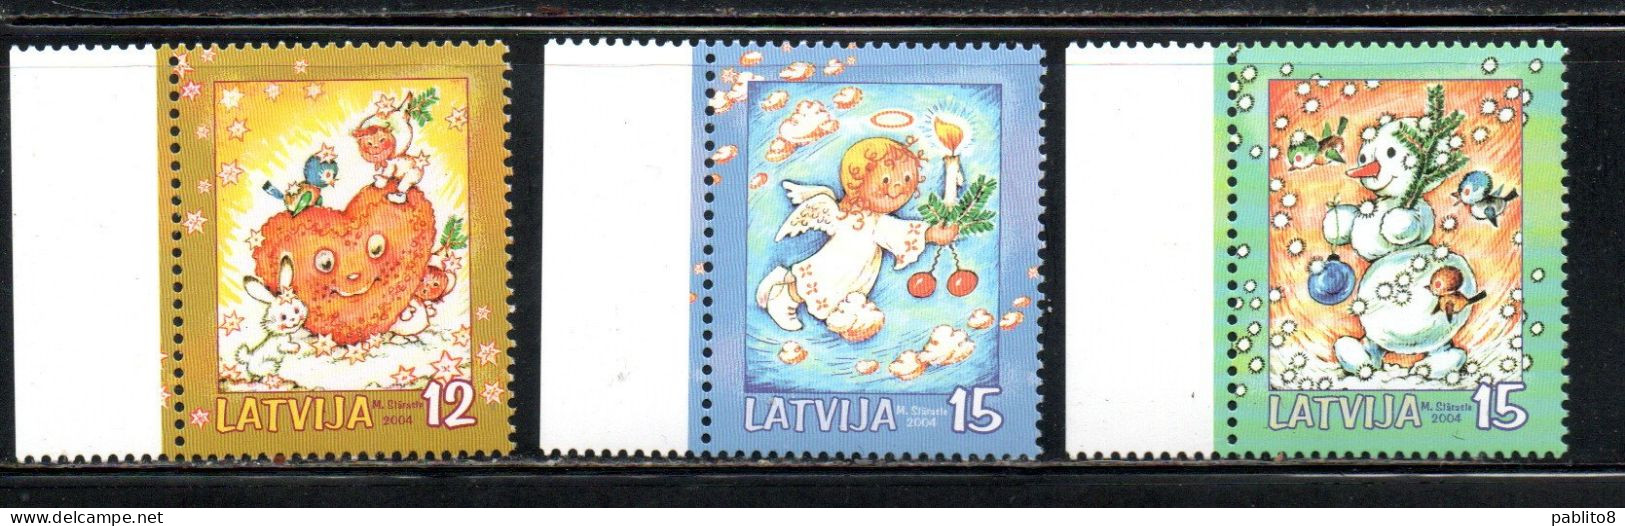 LATVIA LETTLAND LETTONIA LATVIJA 2004 CHRISTMAS NATALE NOEL WEIHNACHTEN NAVIDAD COMPLETE SET SERIE COMPLETA MNH - Letonia